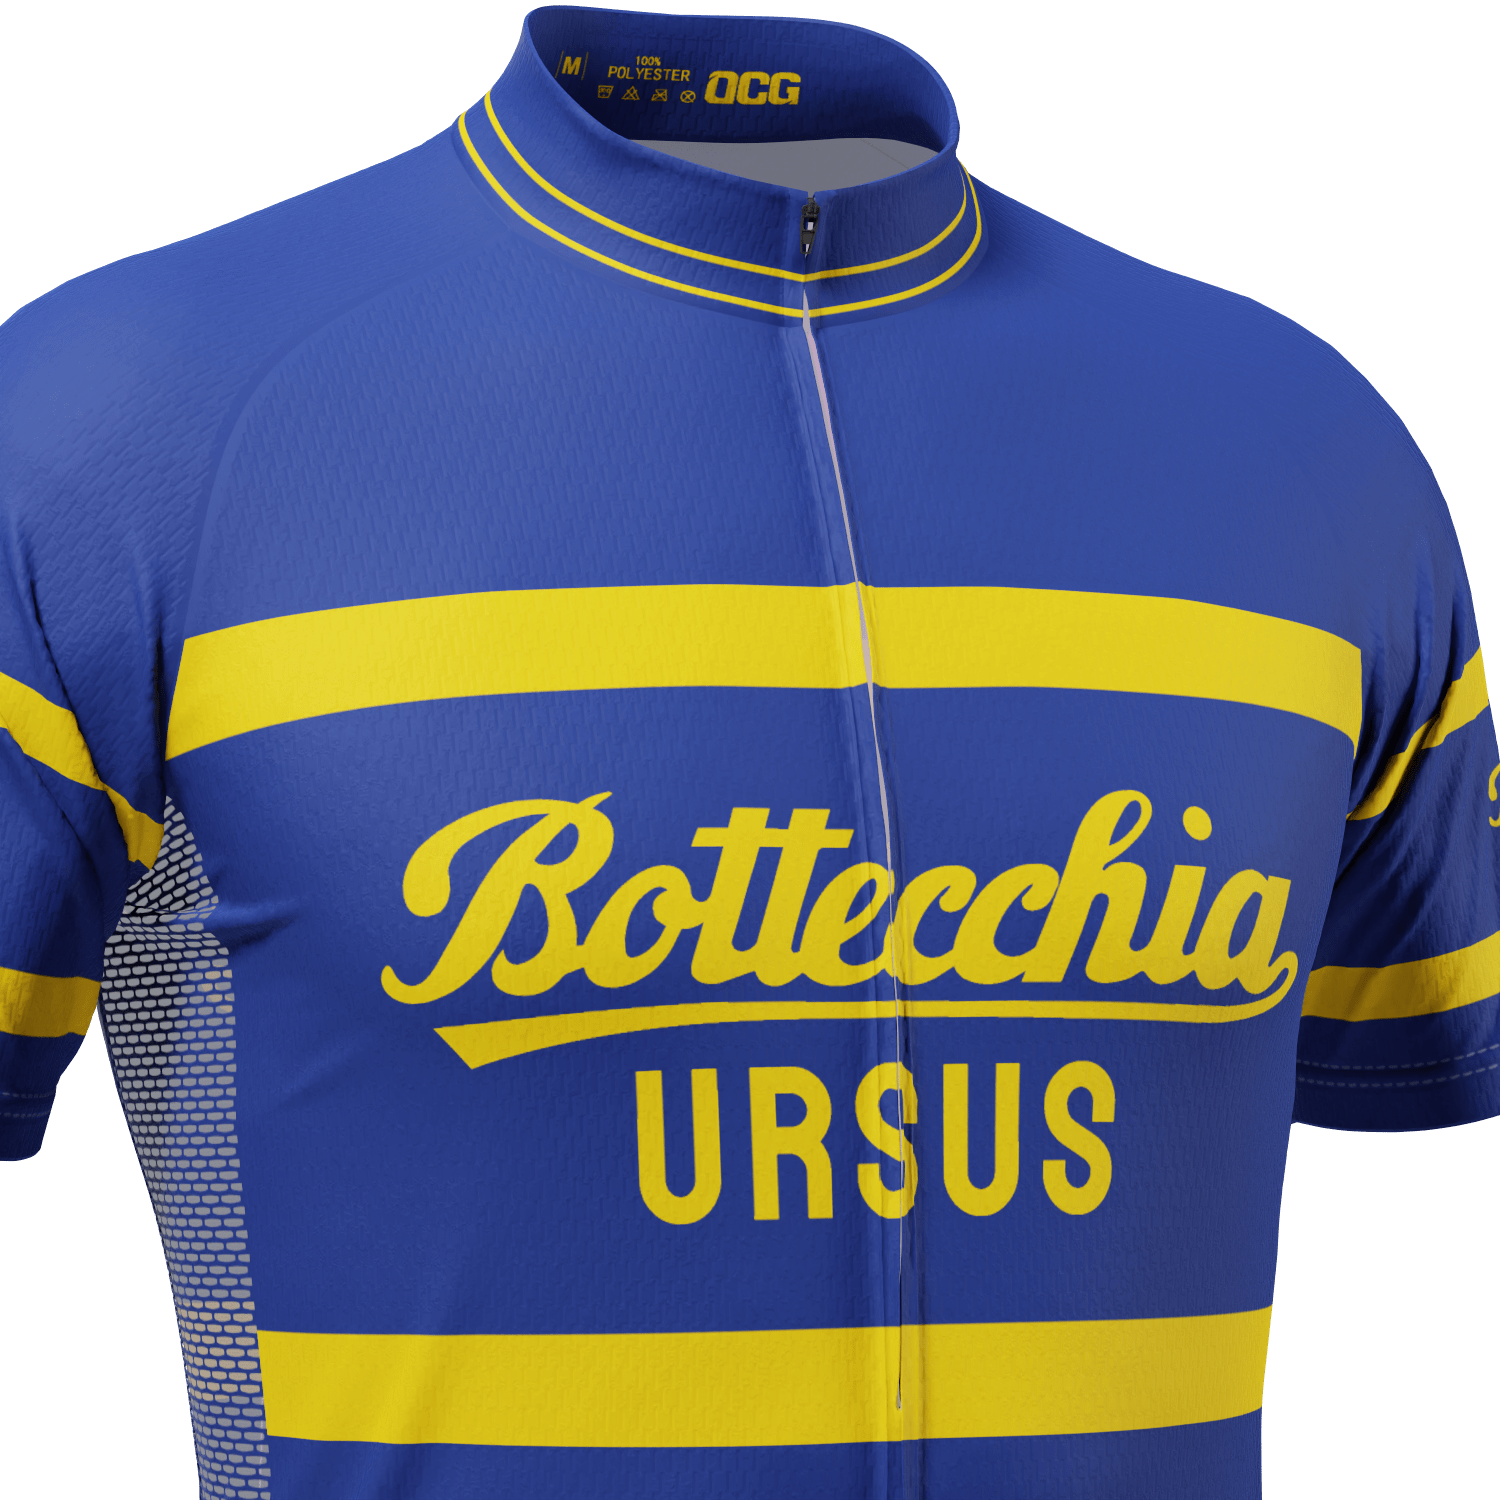 Men's Bottecchia Ursus Short Sleeve Cycling Jersey